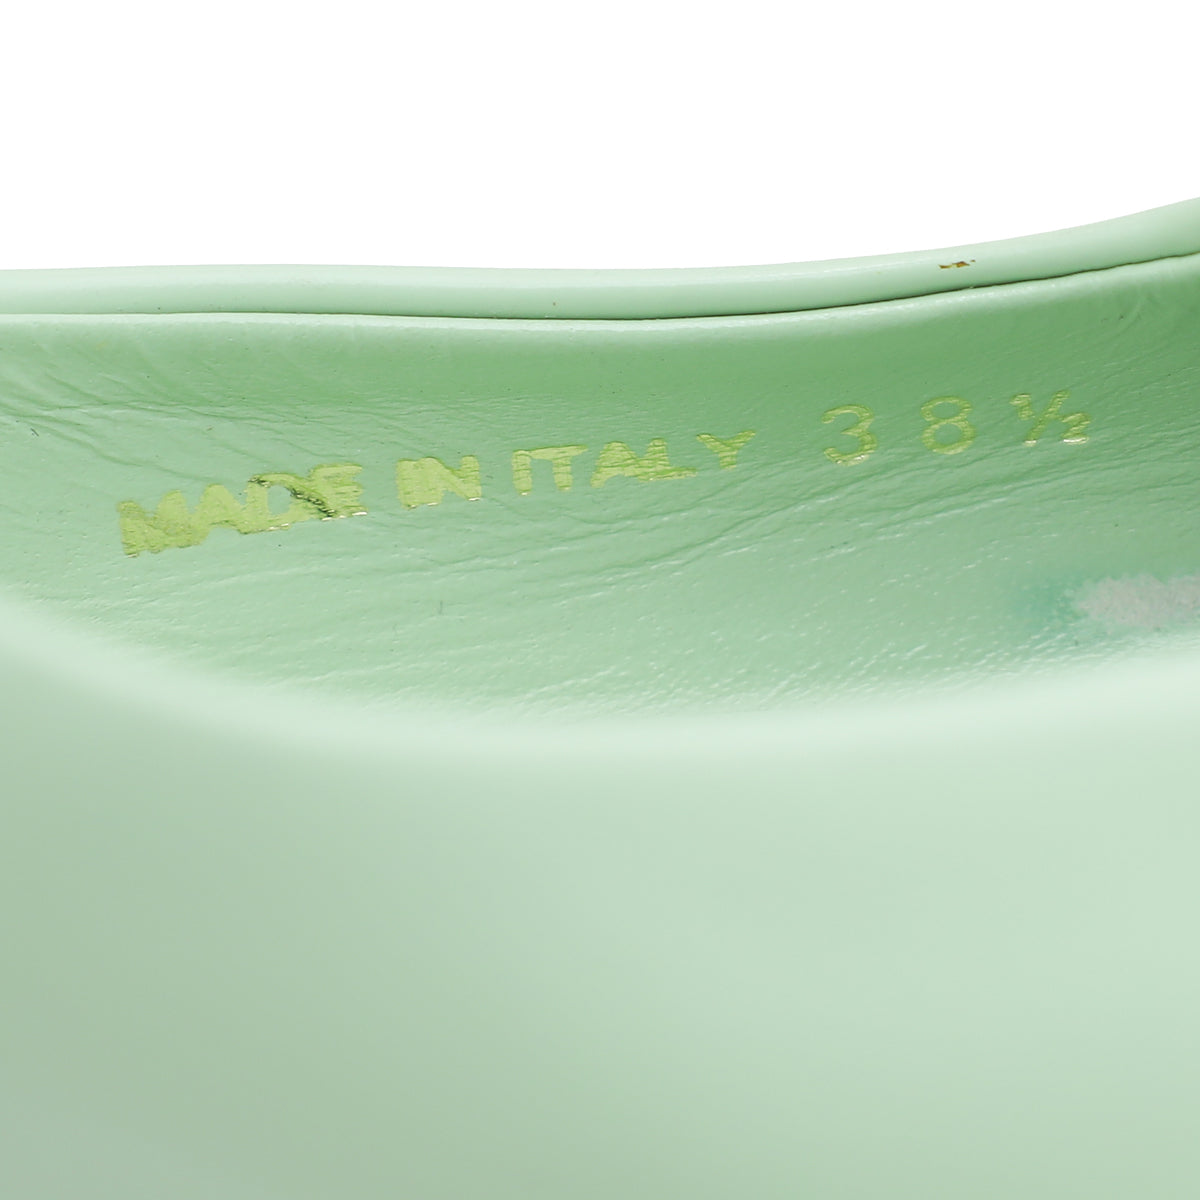 Prada Mint Green Soft Padded Slingback Pumps 38.5